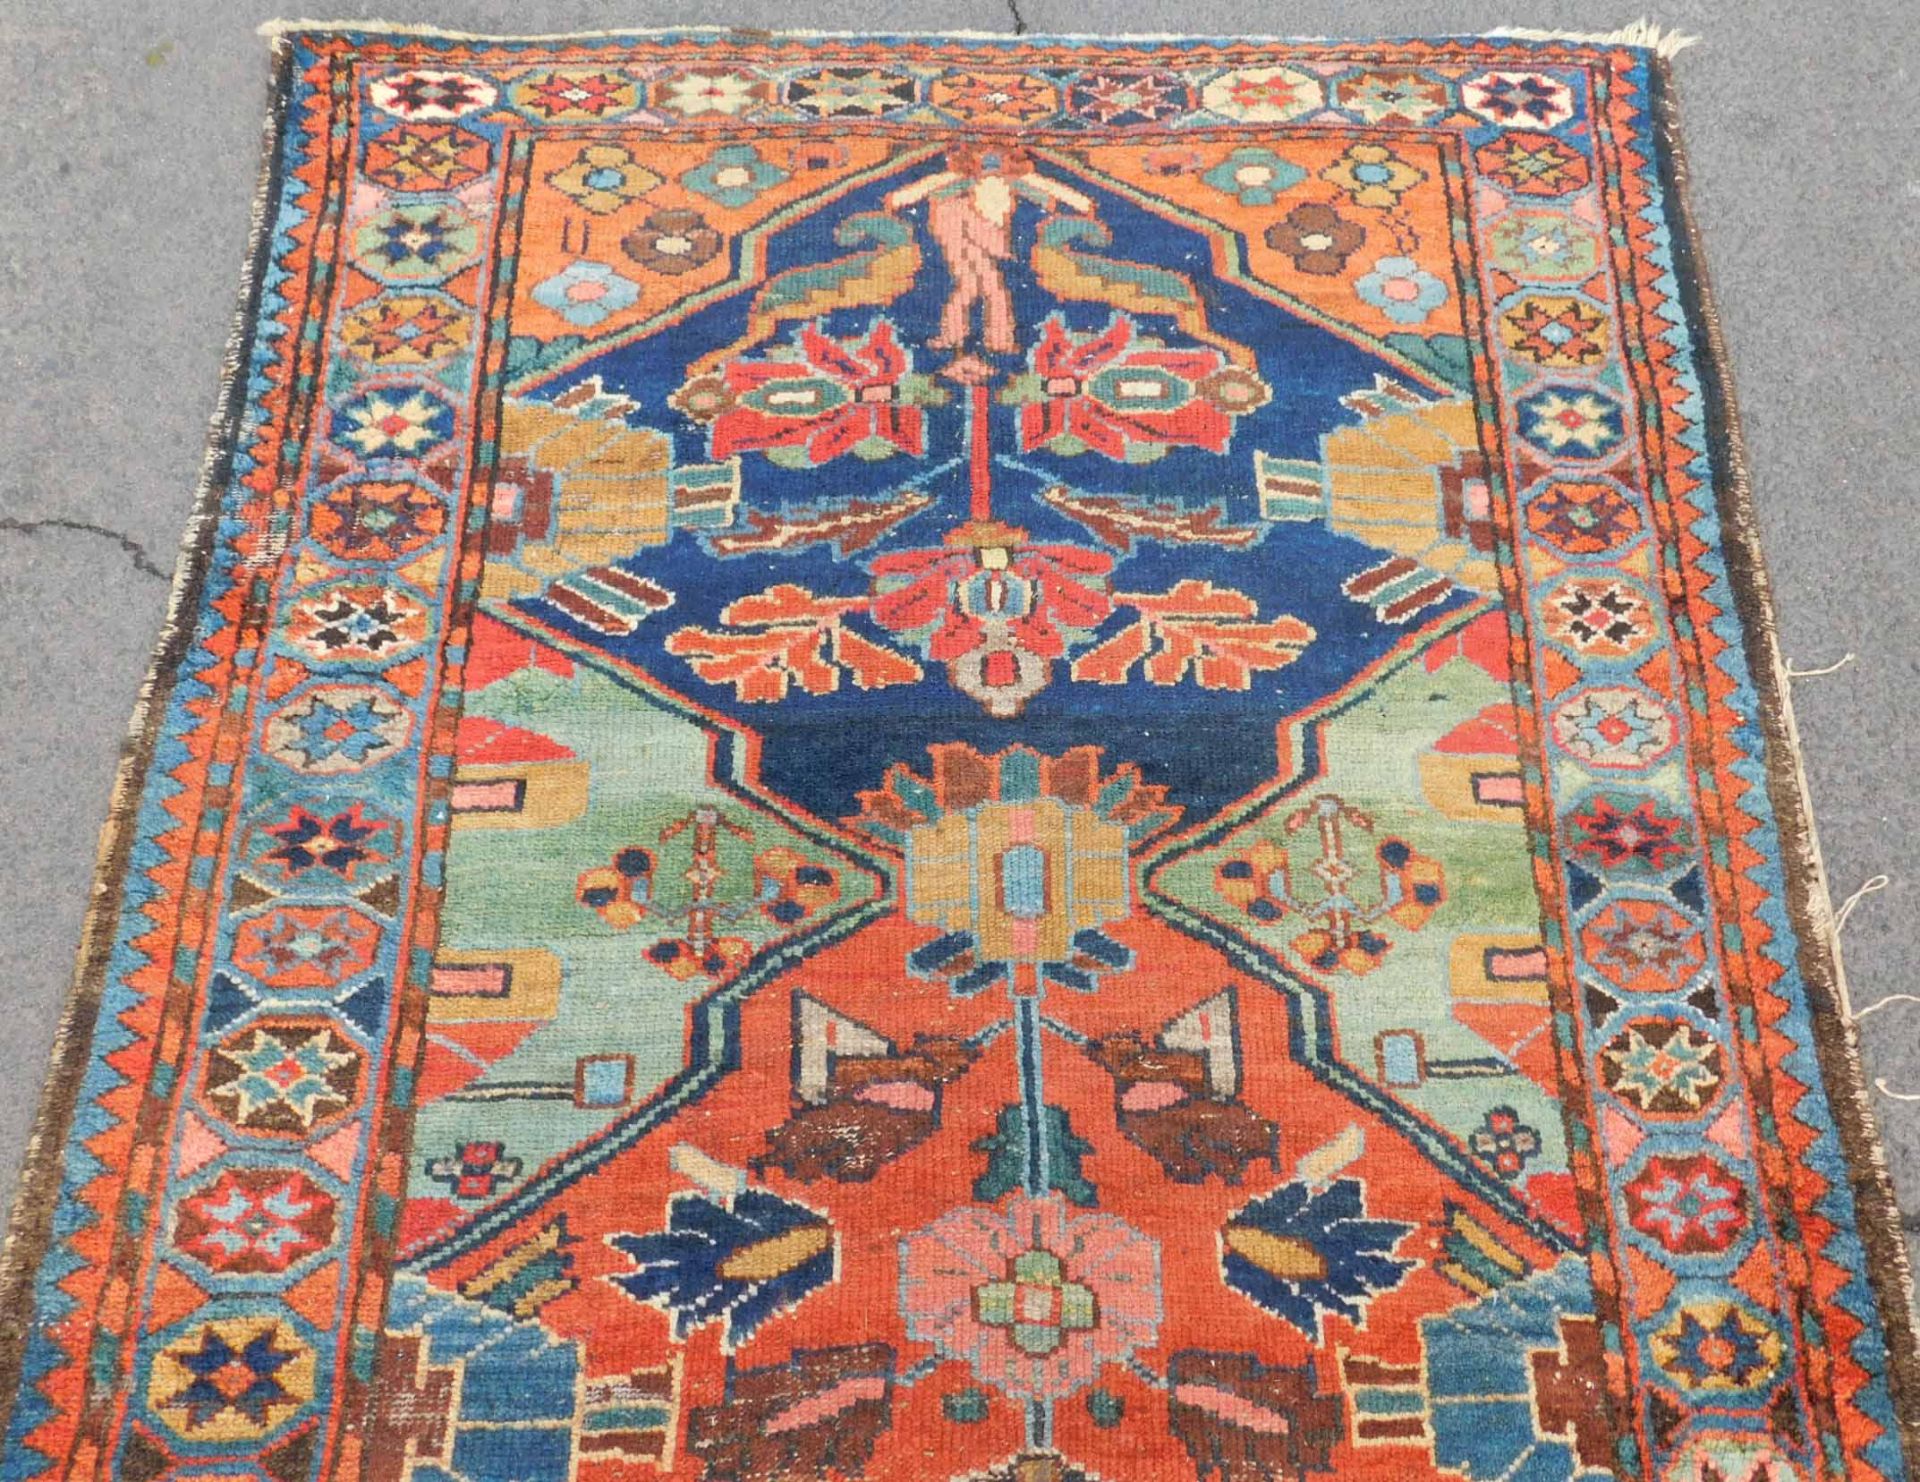 Karagöz Persian rug. Iran. Around 80 - 100 years old. - Image 6 of 8